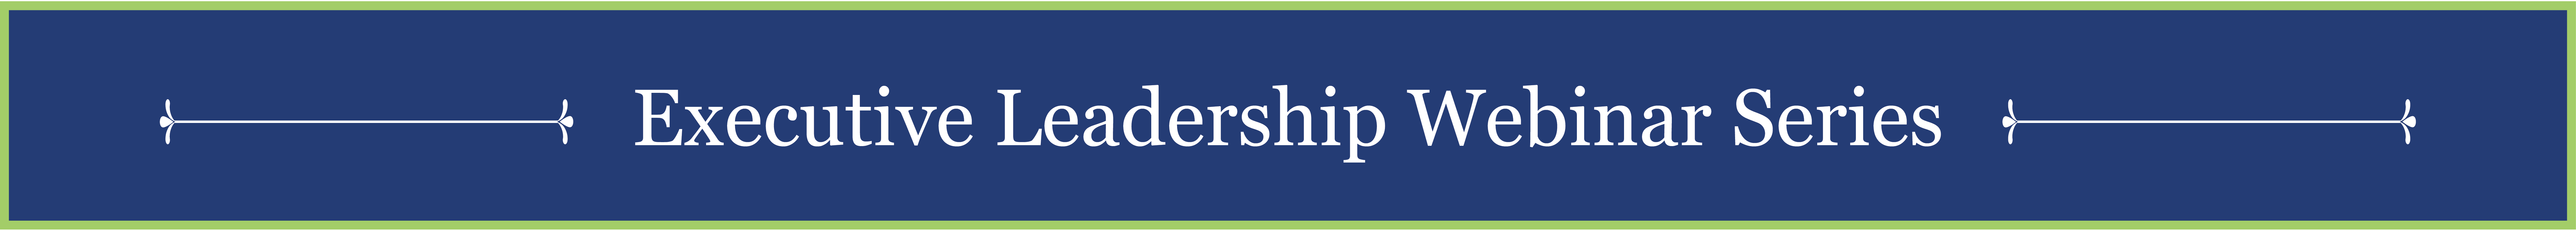 Executive Leadership Webinar Series Web Banner